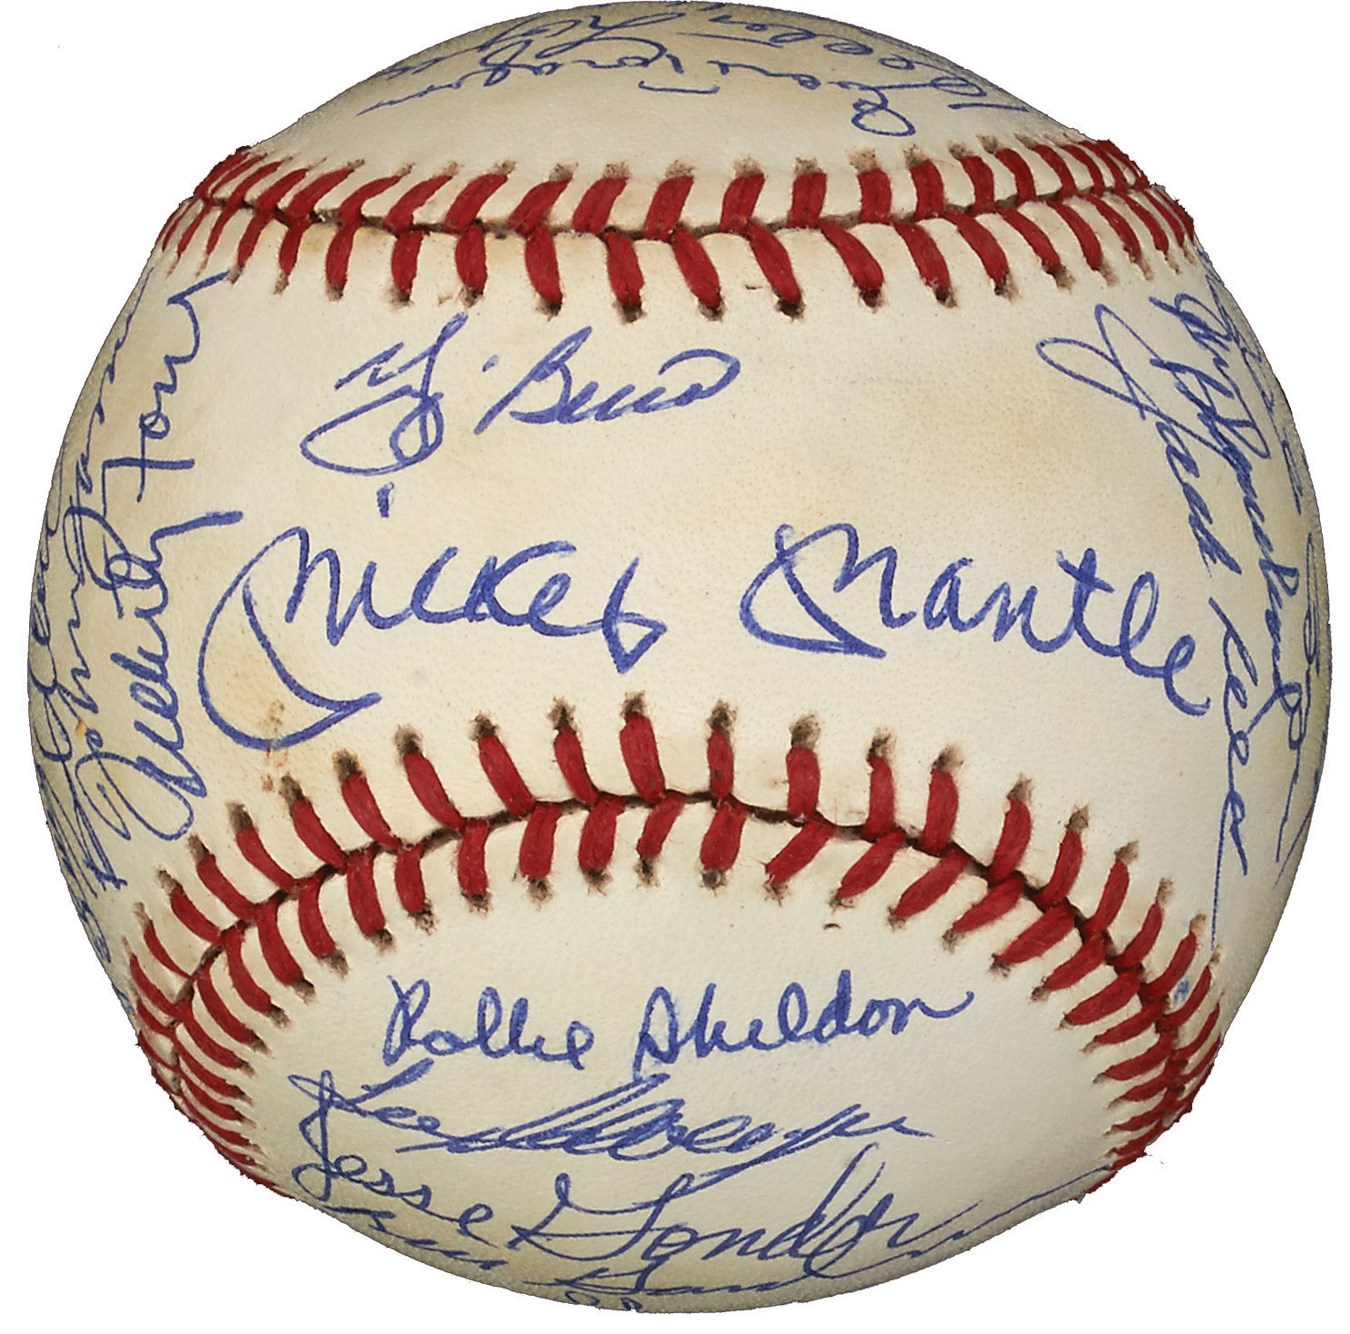 NY Yankees, Giants & Mets - 1961 World Champion New York Yankees Reunion Team-Signed Baseball